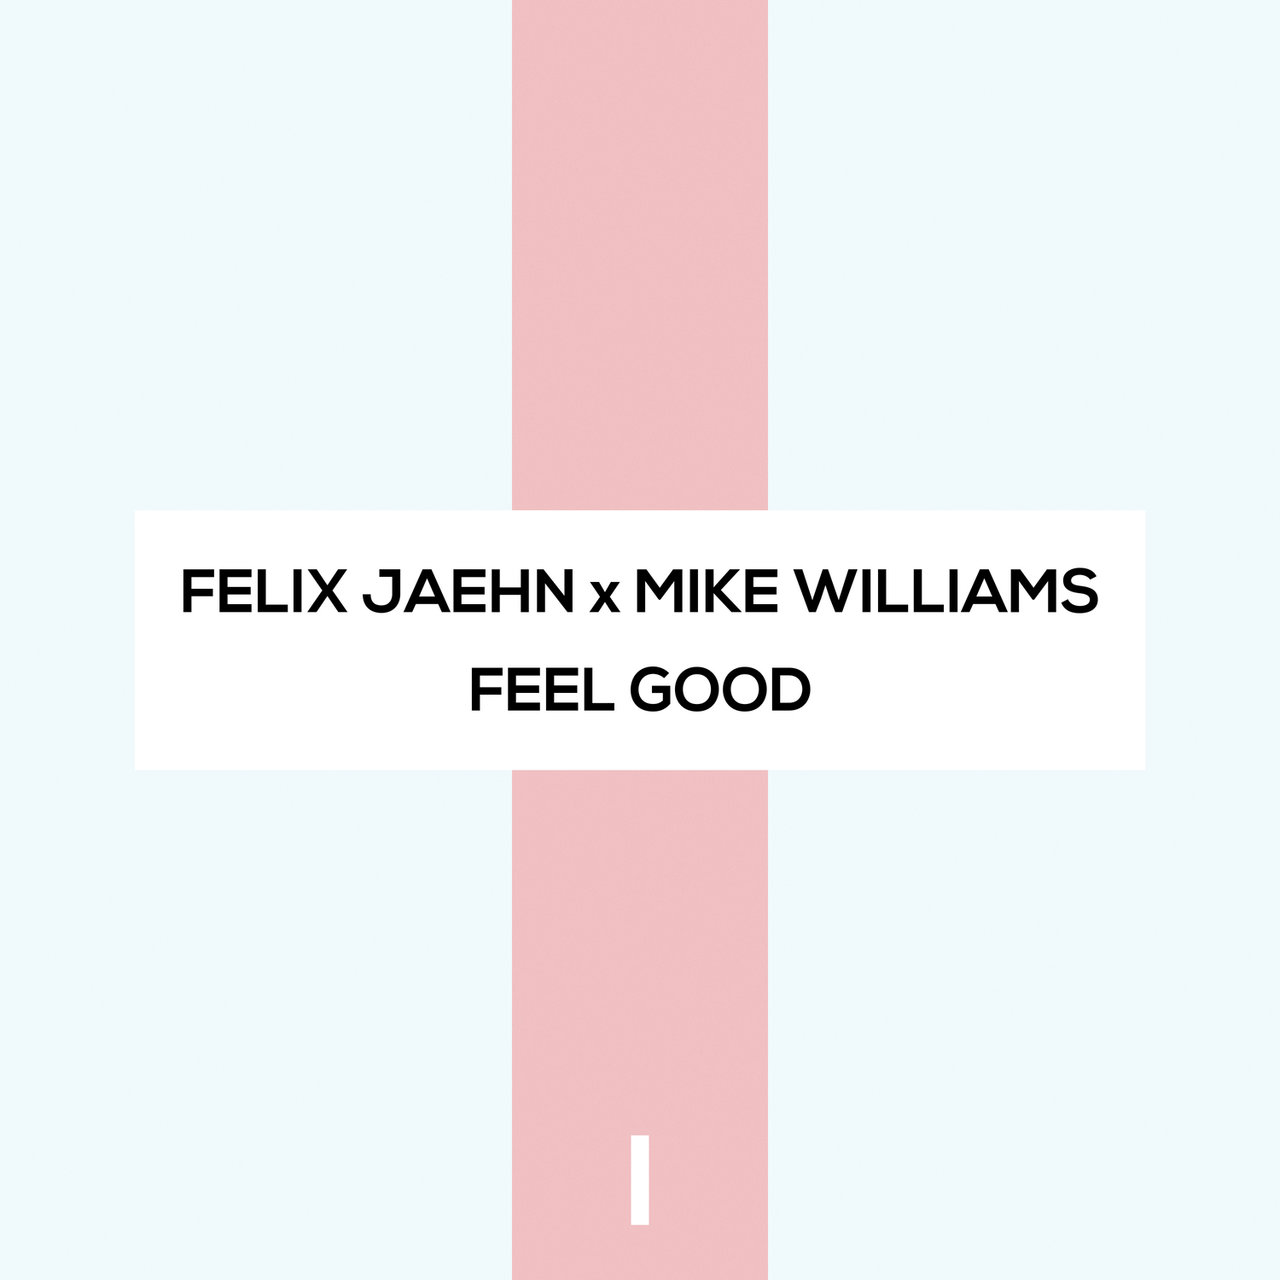 Felix Jaehn & Mike Williams Feel Good cover artwork